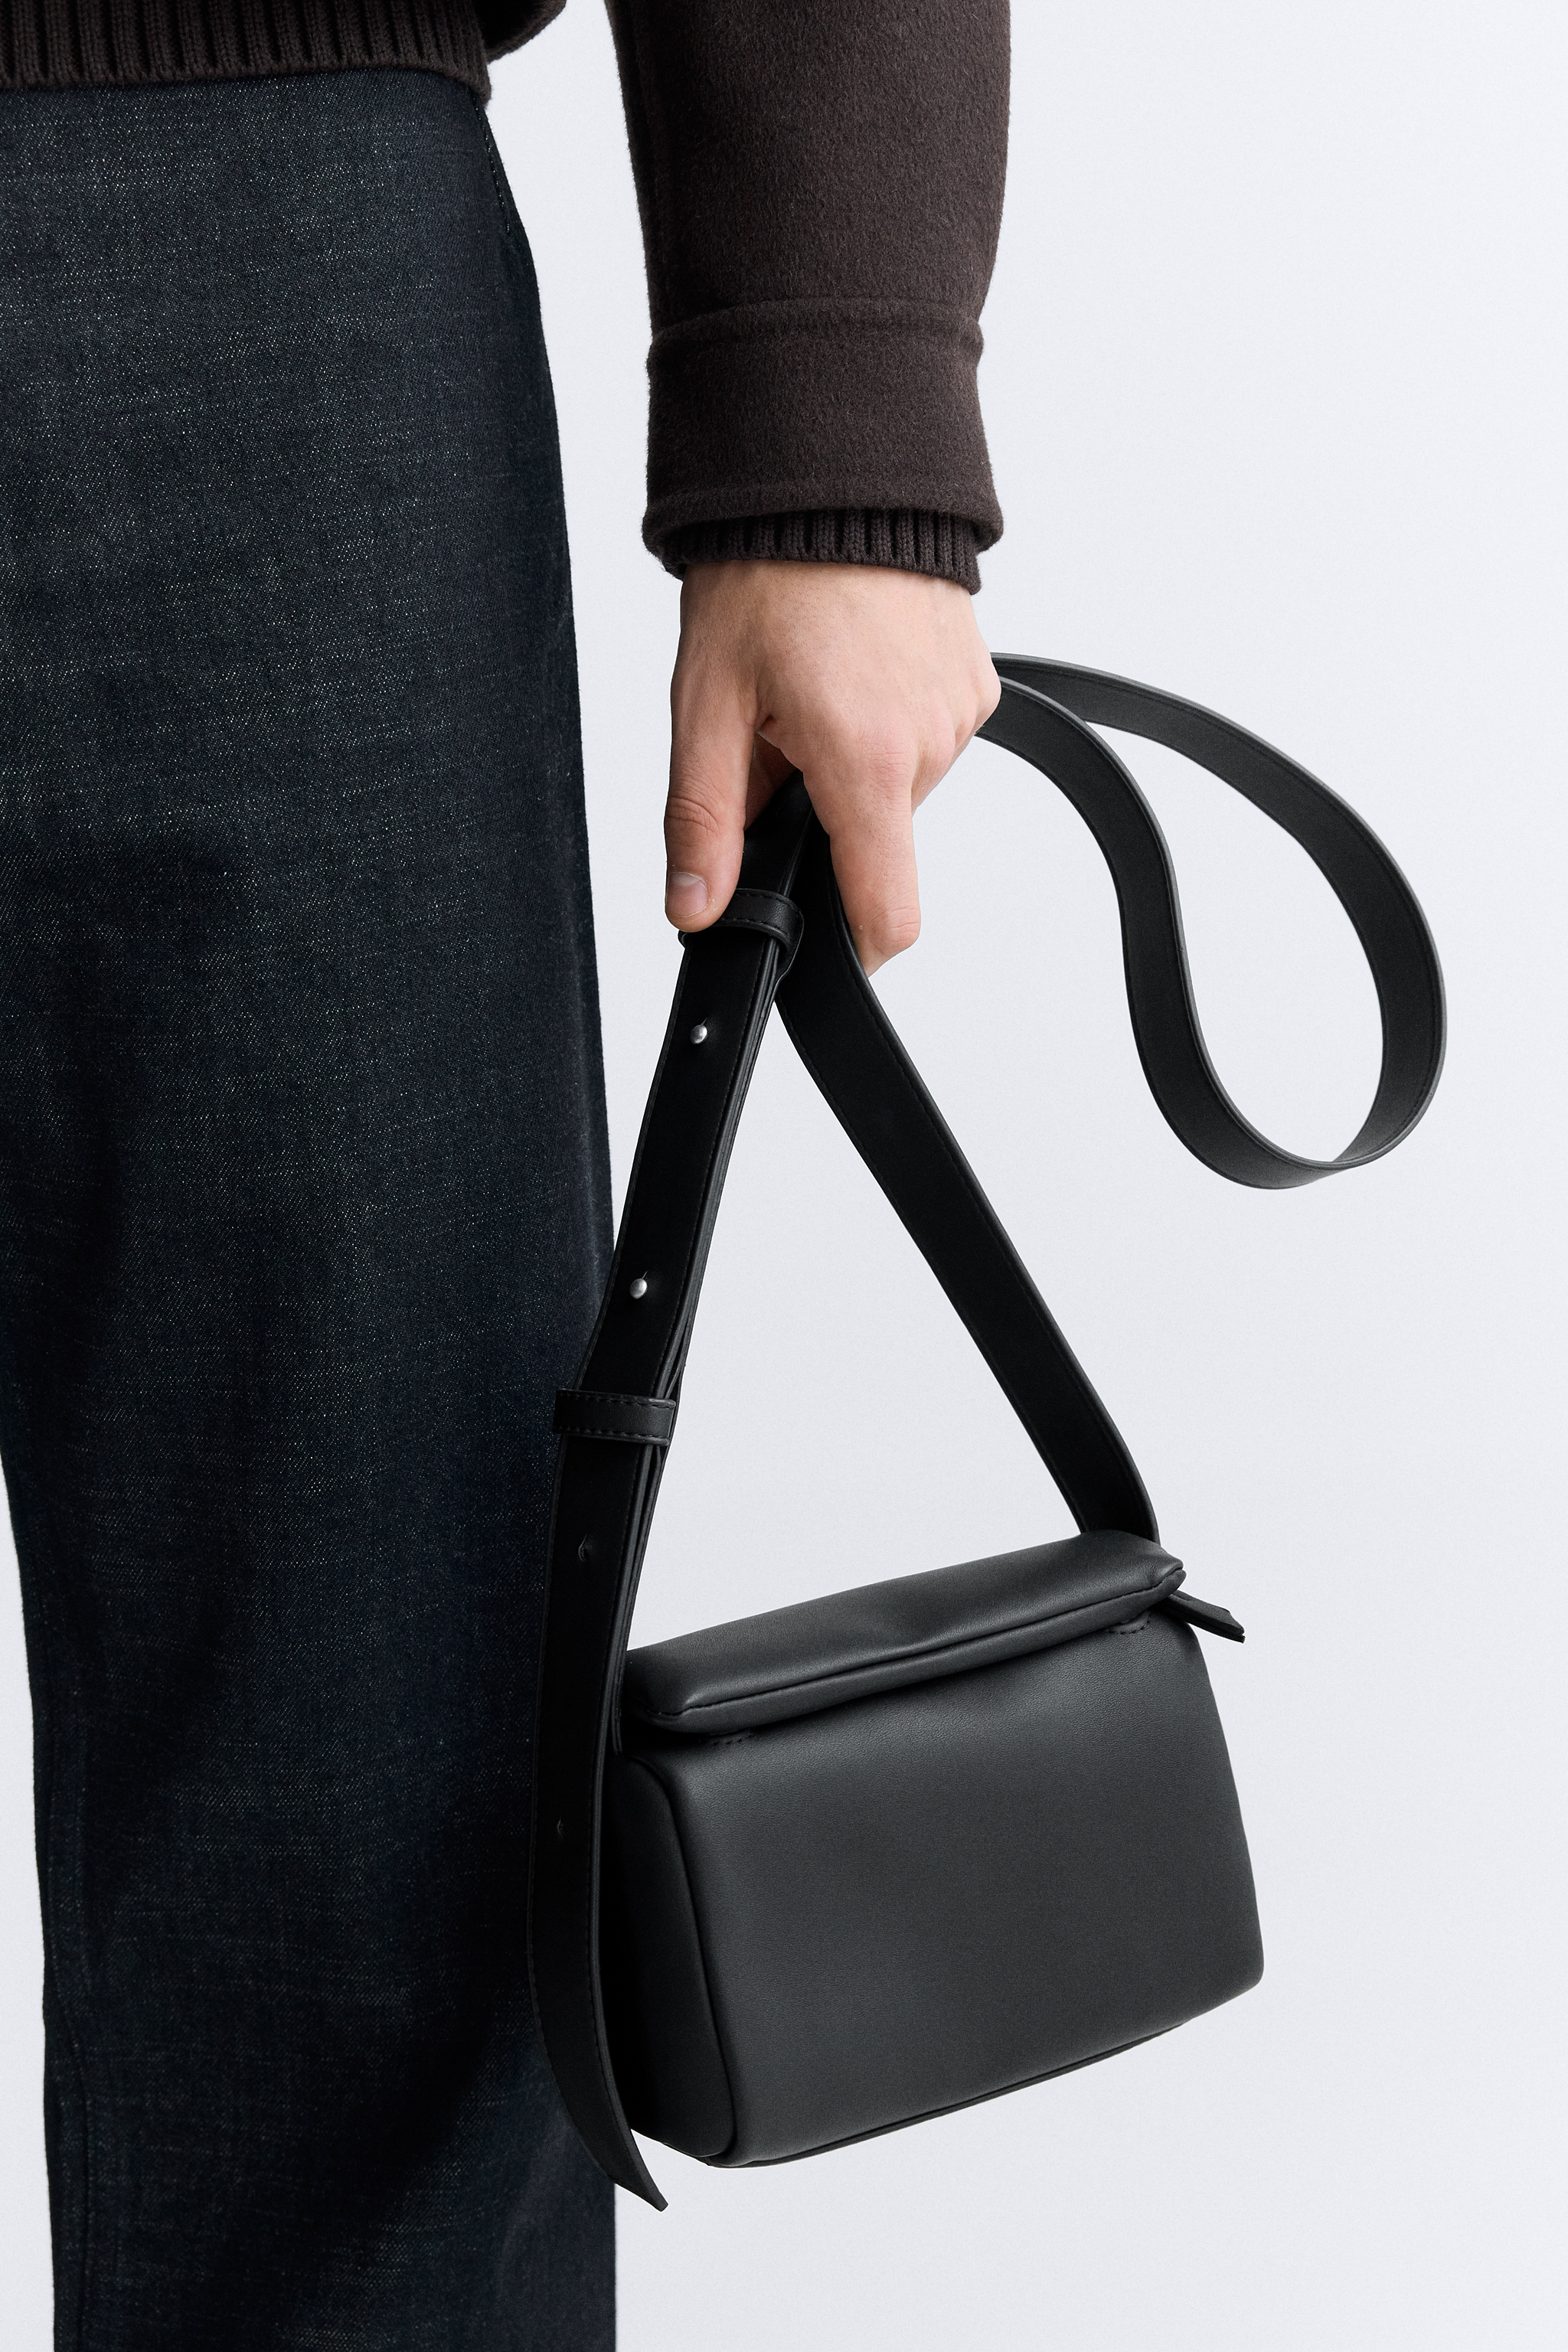 Mini Crossbody Bag Small Shoulder Bag For Men, Women Mini Messenger Satchel  Bag Black